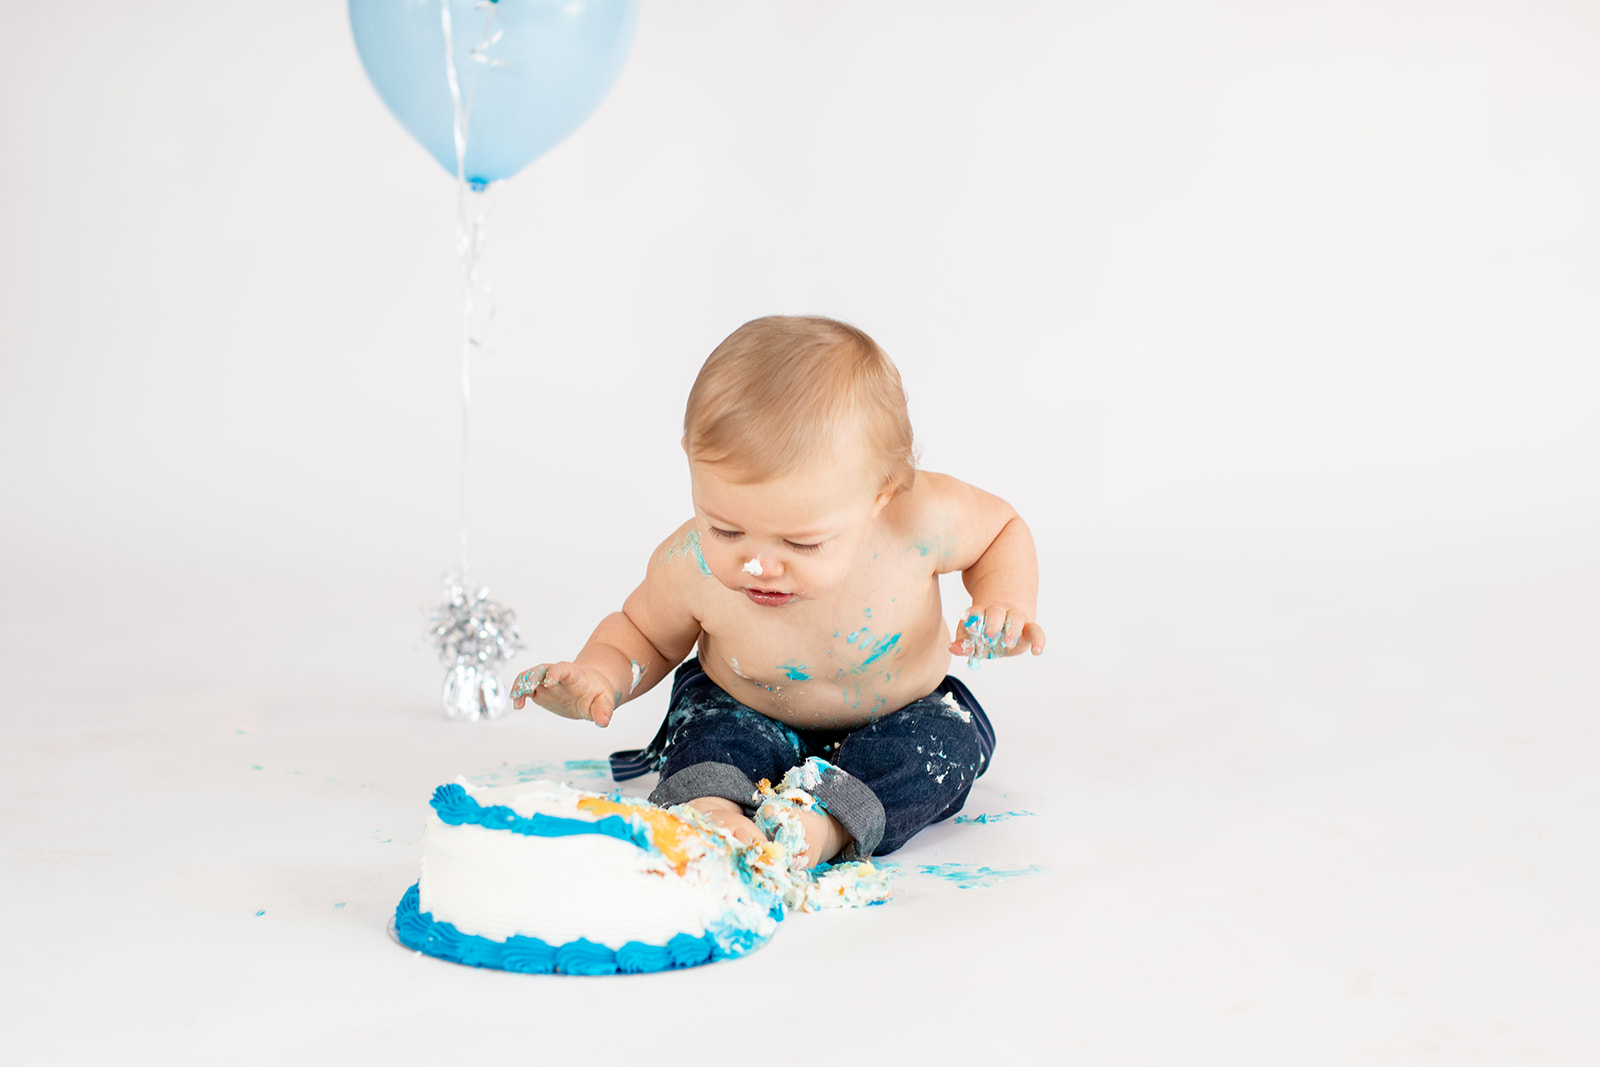 One Year Old Baby Boy Cake Smash Jandd Studio 2020 Jandd Photo Llc